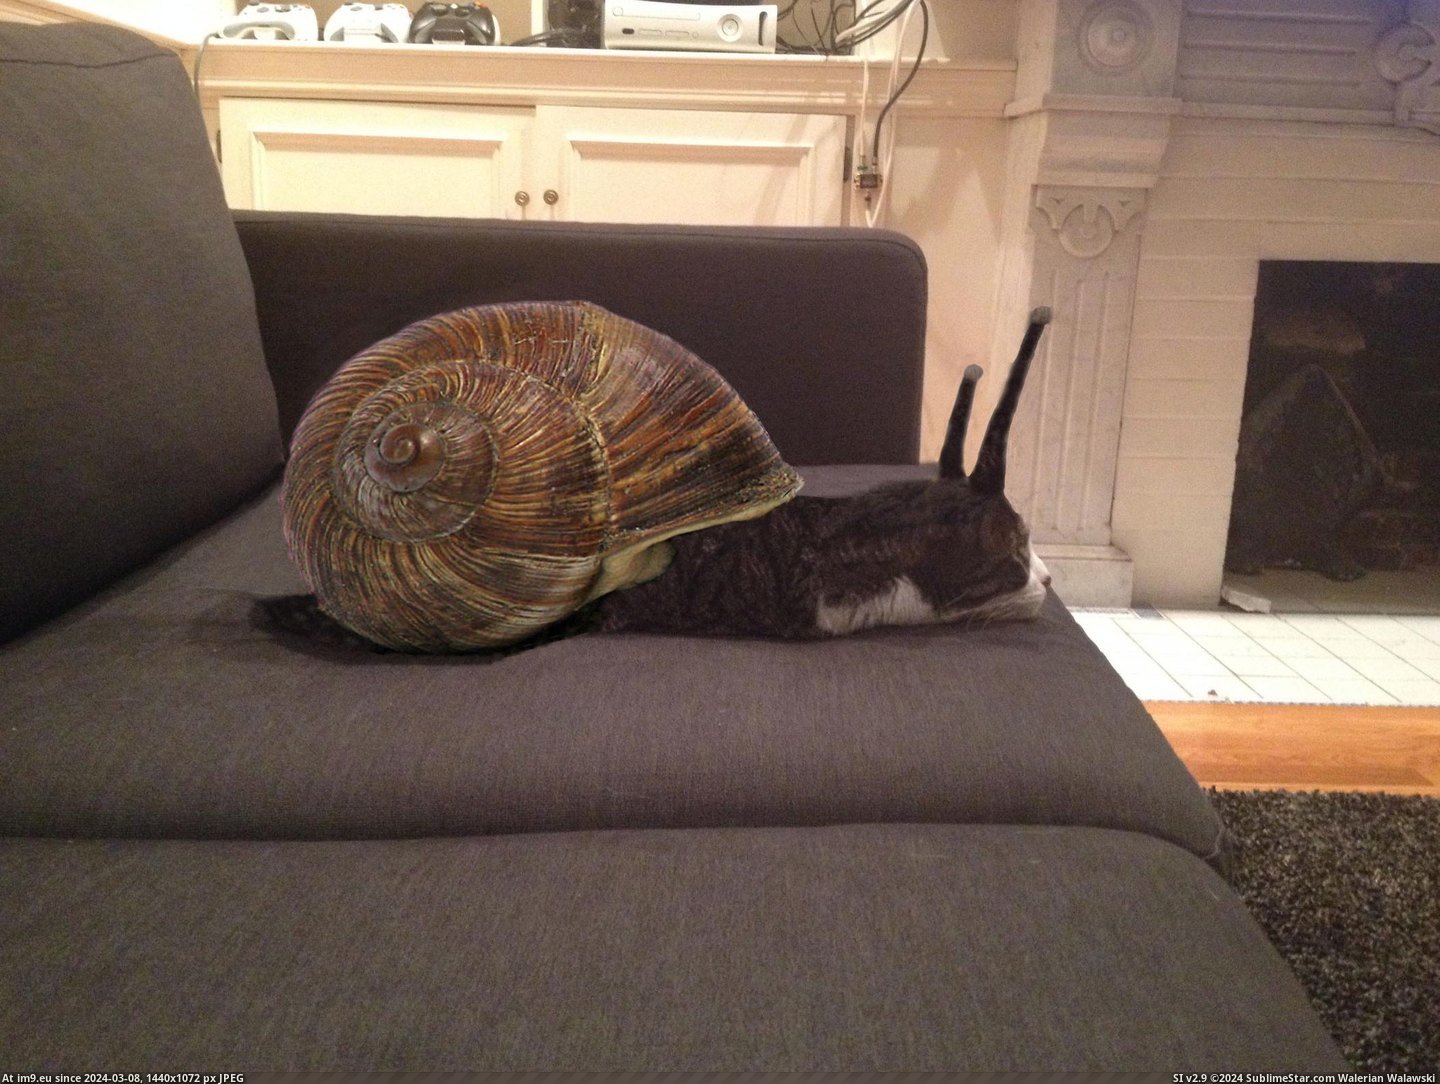 #Cat #Snail #Roommate [Pics] My roommate's cat... is a snail. Pic. (Bild von album My r/PICS favs))